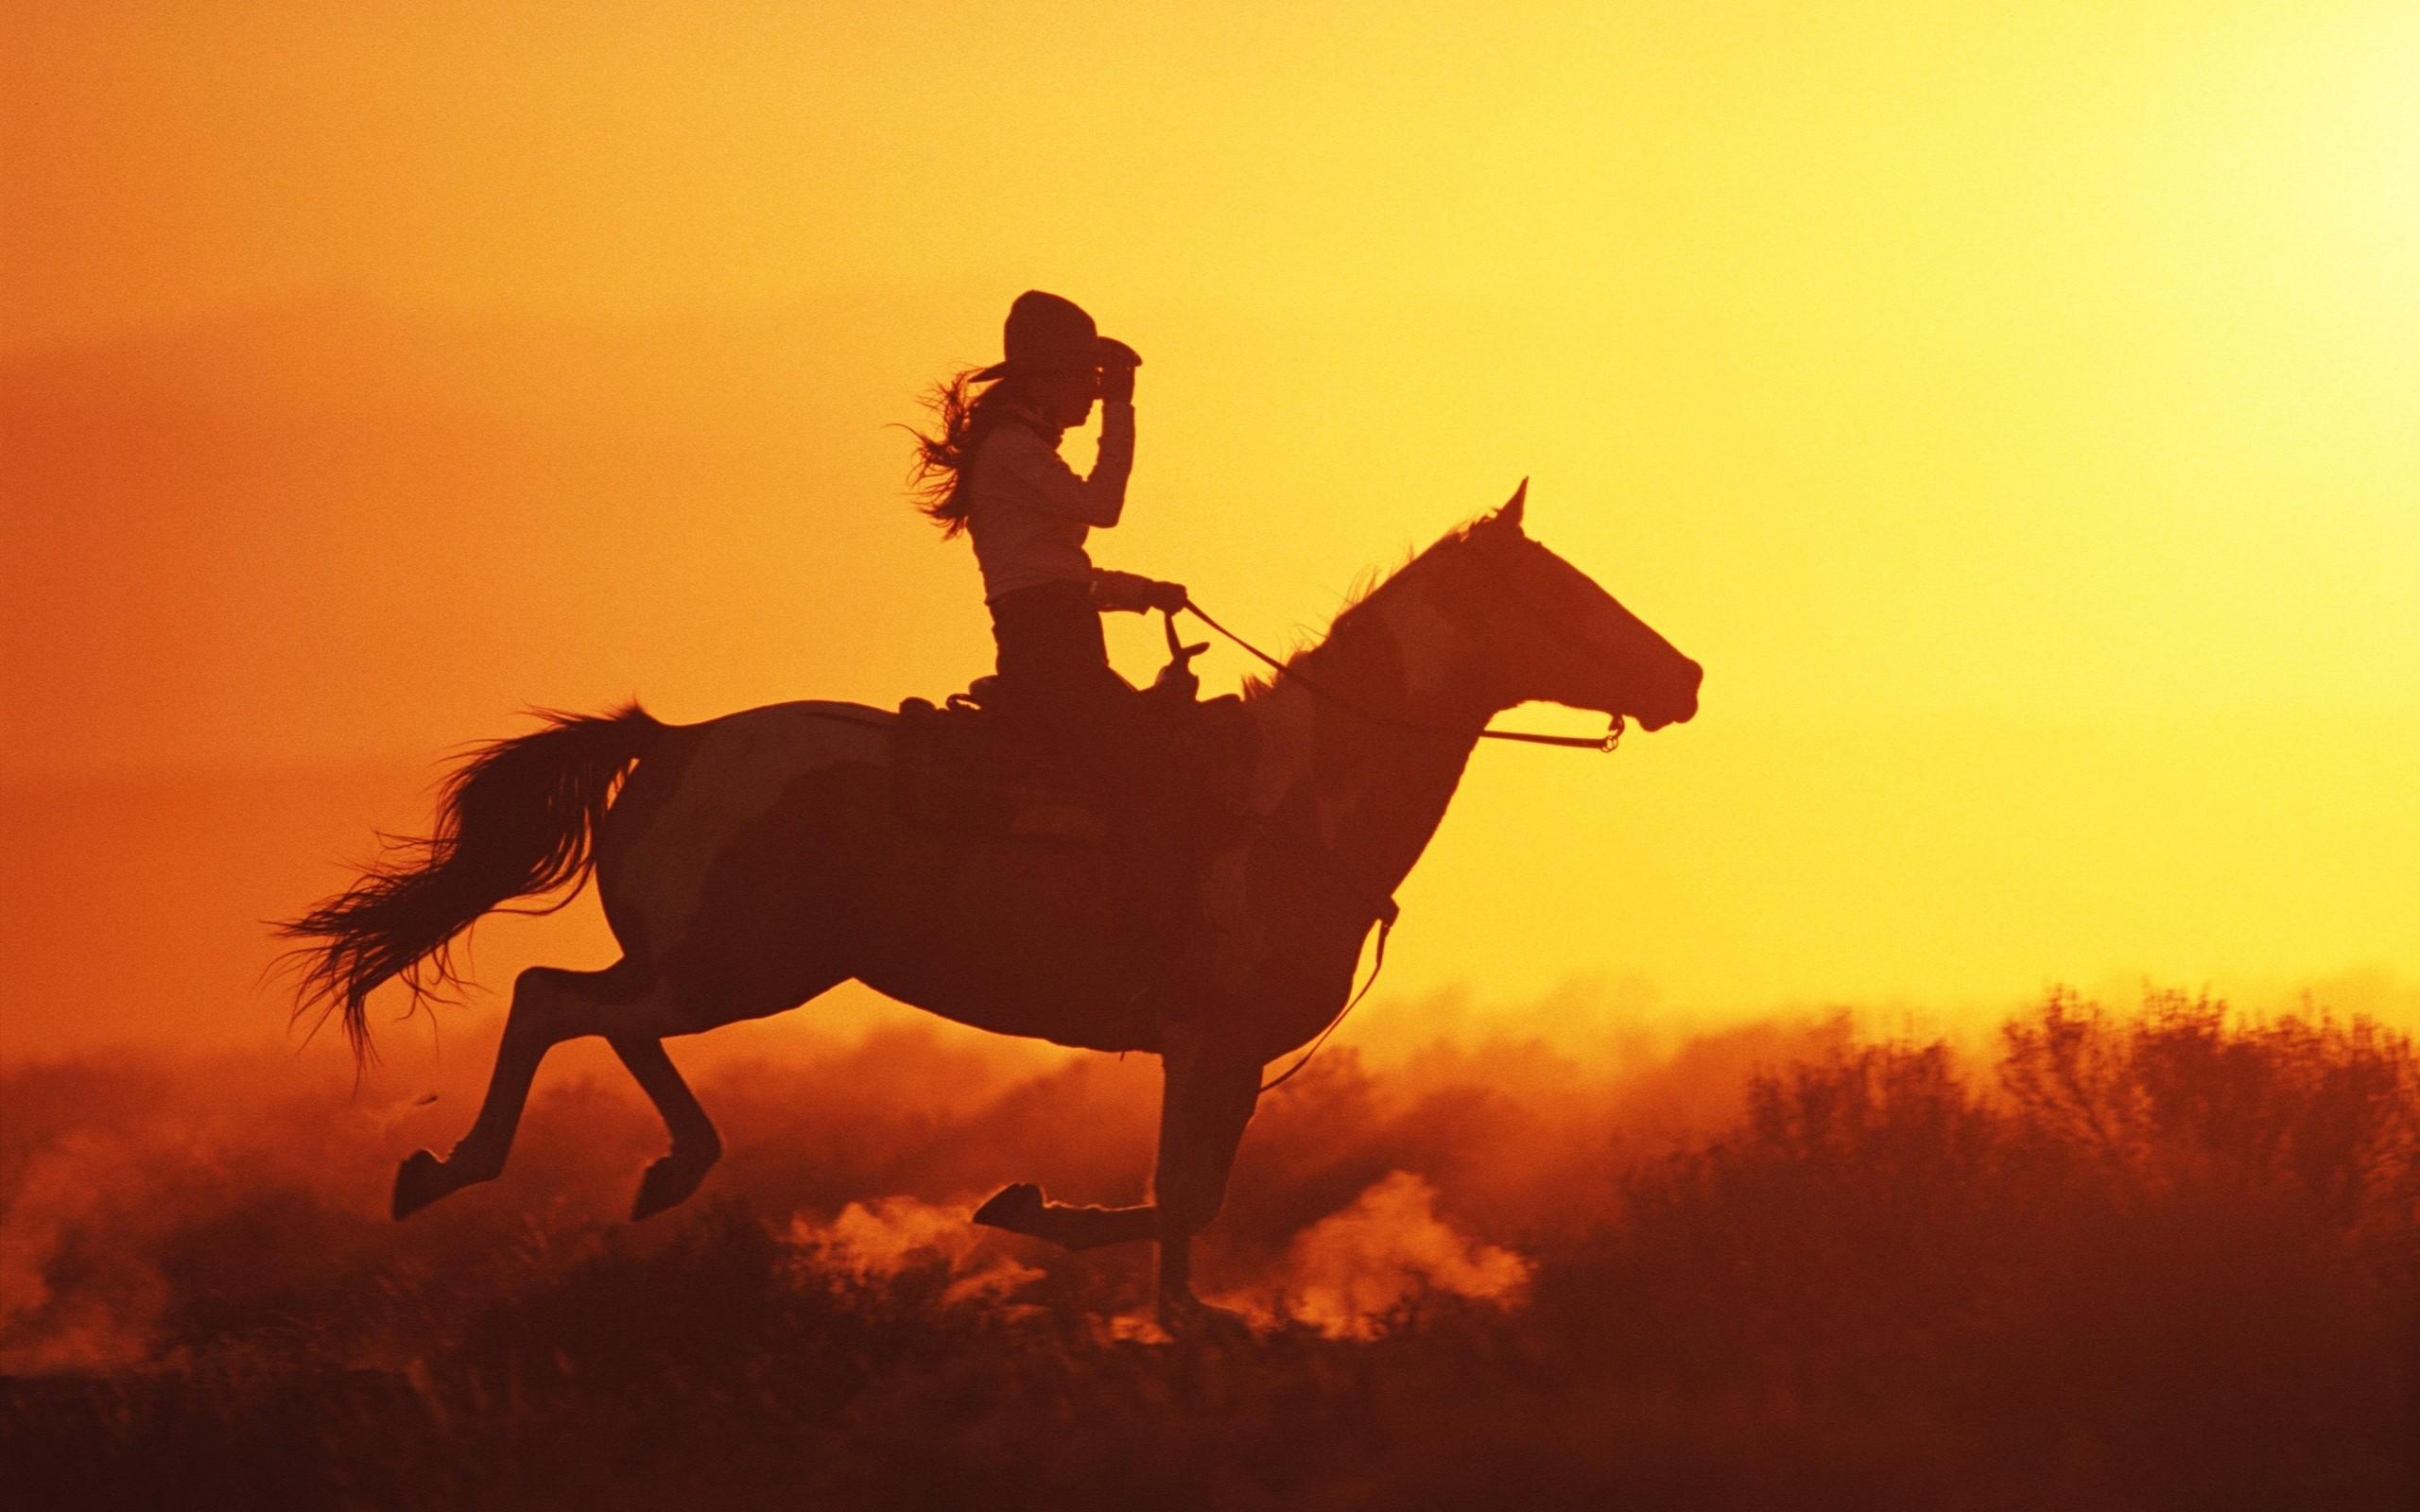 Best cowgirl riding fan photo